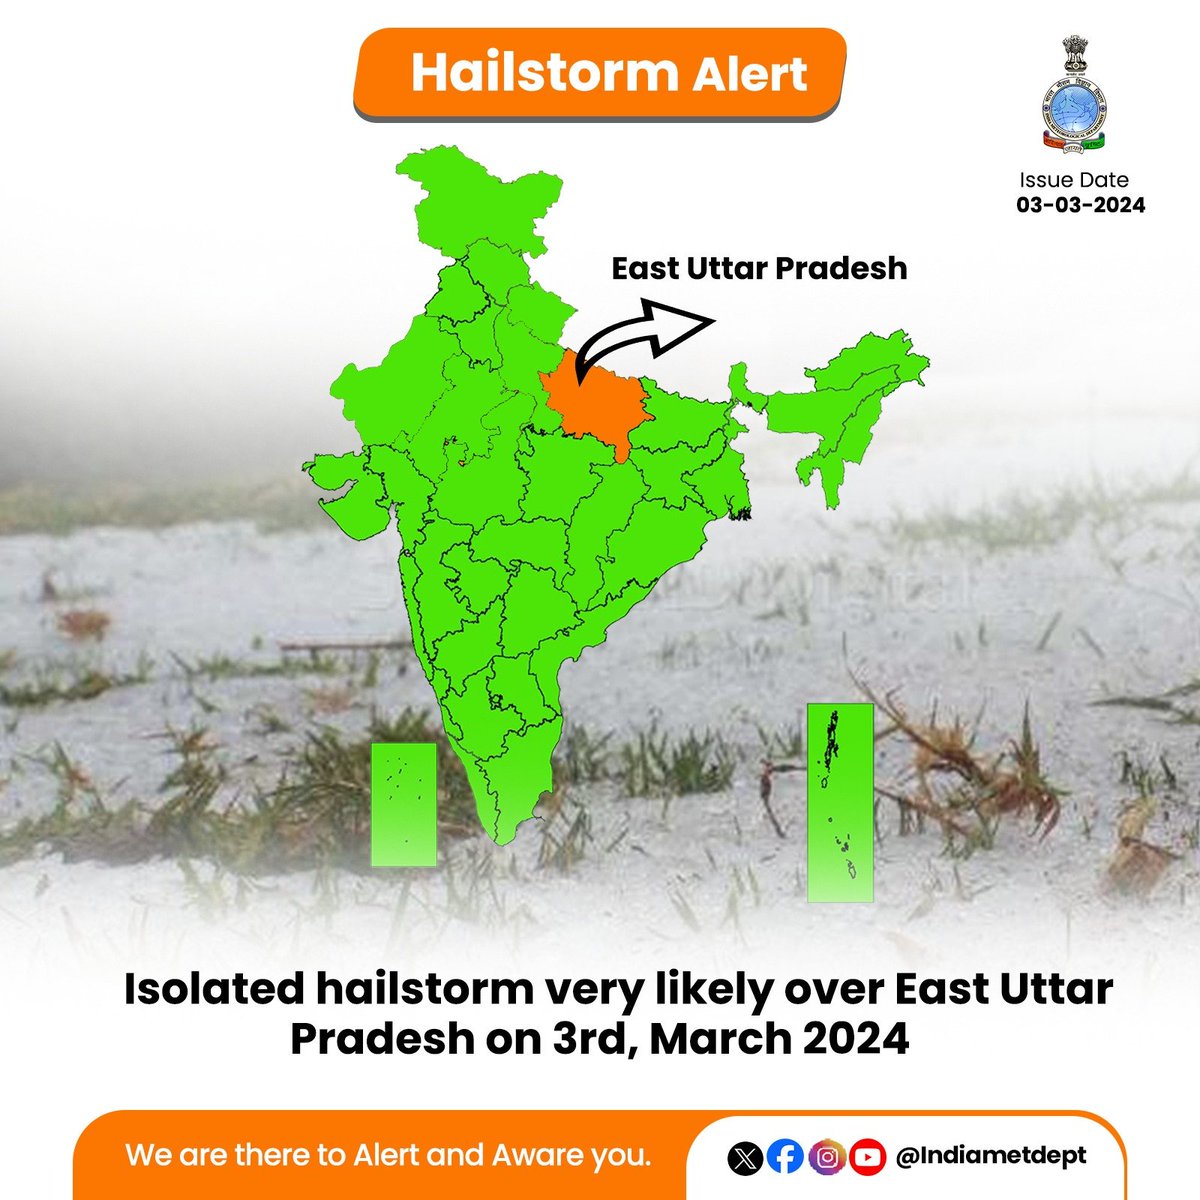 Isolated hailstorm very likely over East Uttar Pradesh on 3rd, March 2024.

#UPWeather #HailstormAlert 

@moesgoi
@DDNewslive
@ndmaindia
@airnewsalerts